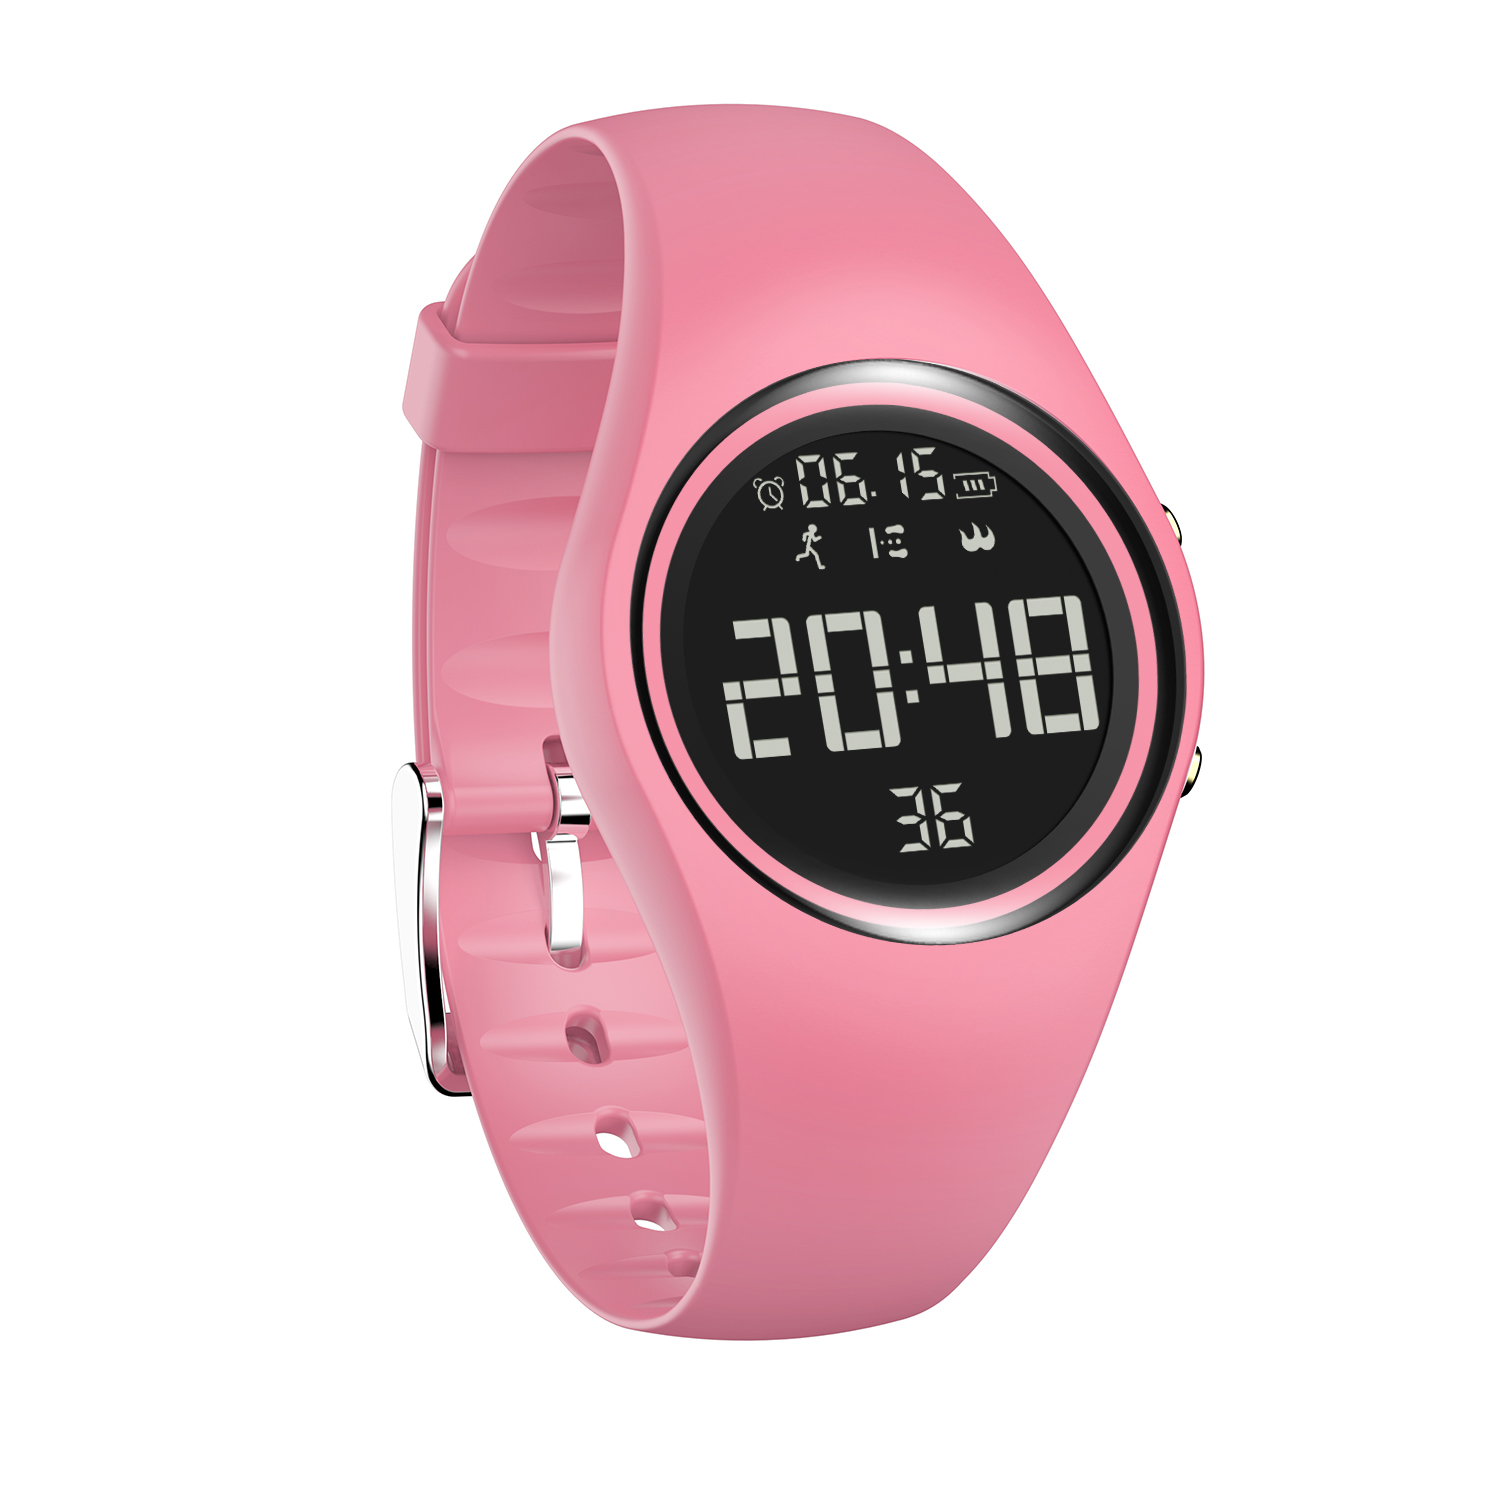 

XANES T5E LCD Screen IP68 Waterproof Smart Watch Pedometer Calorie Count Sports Fitness Smart Bracelet